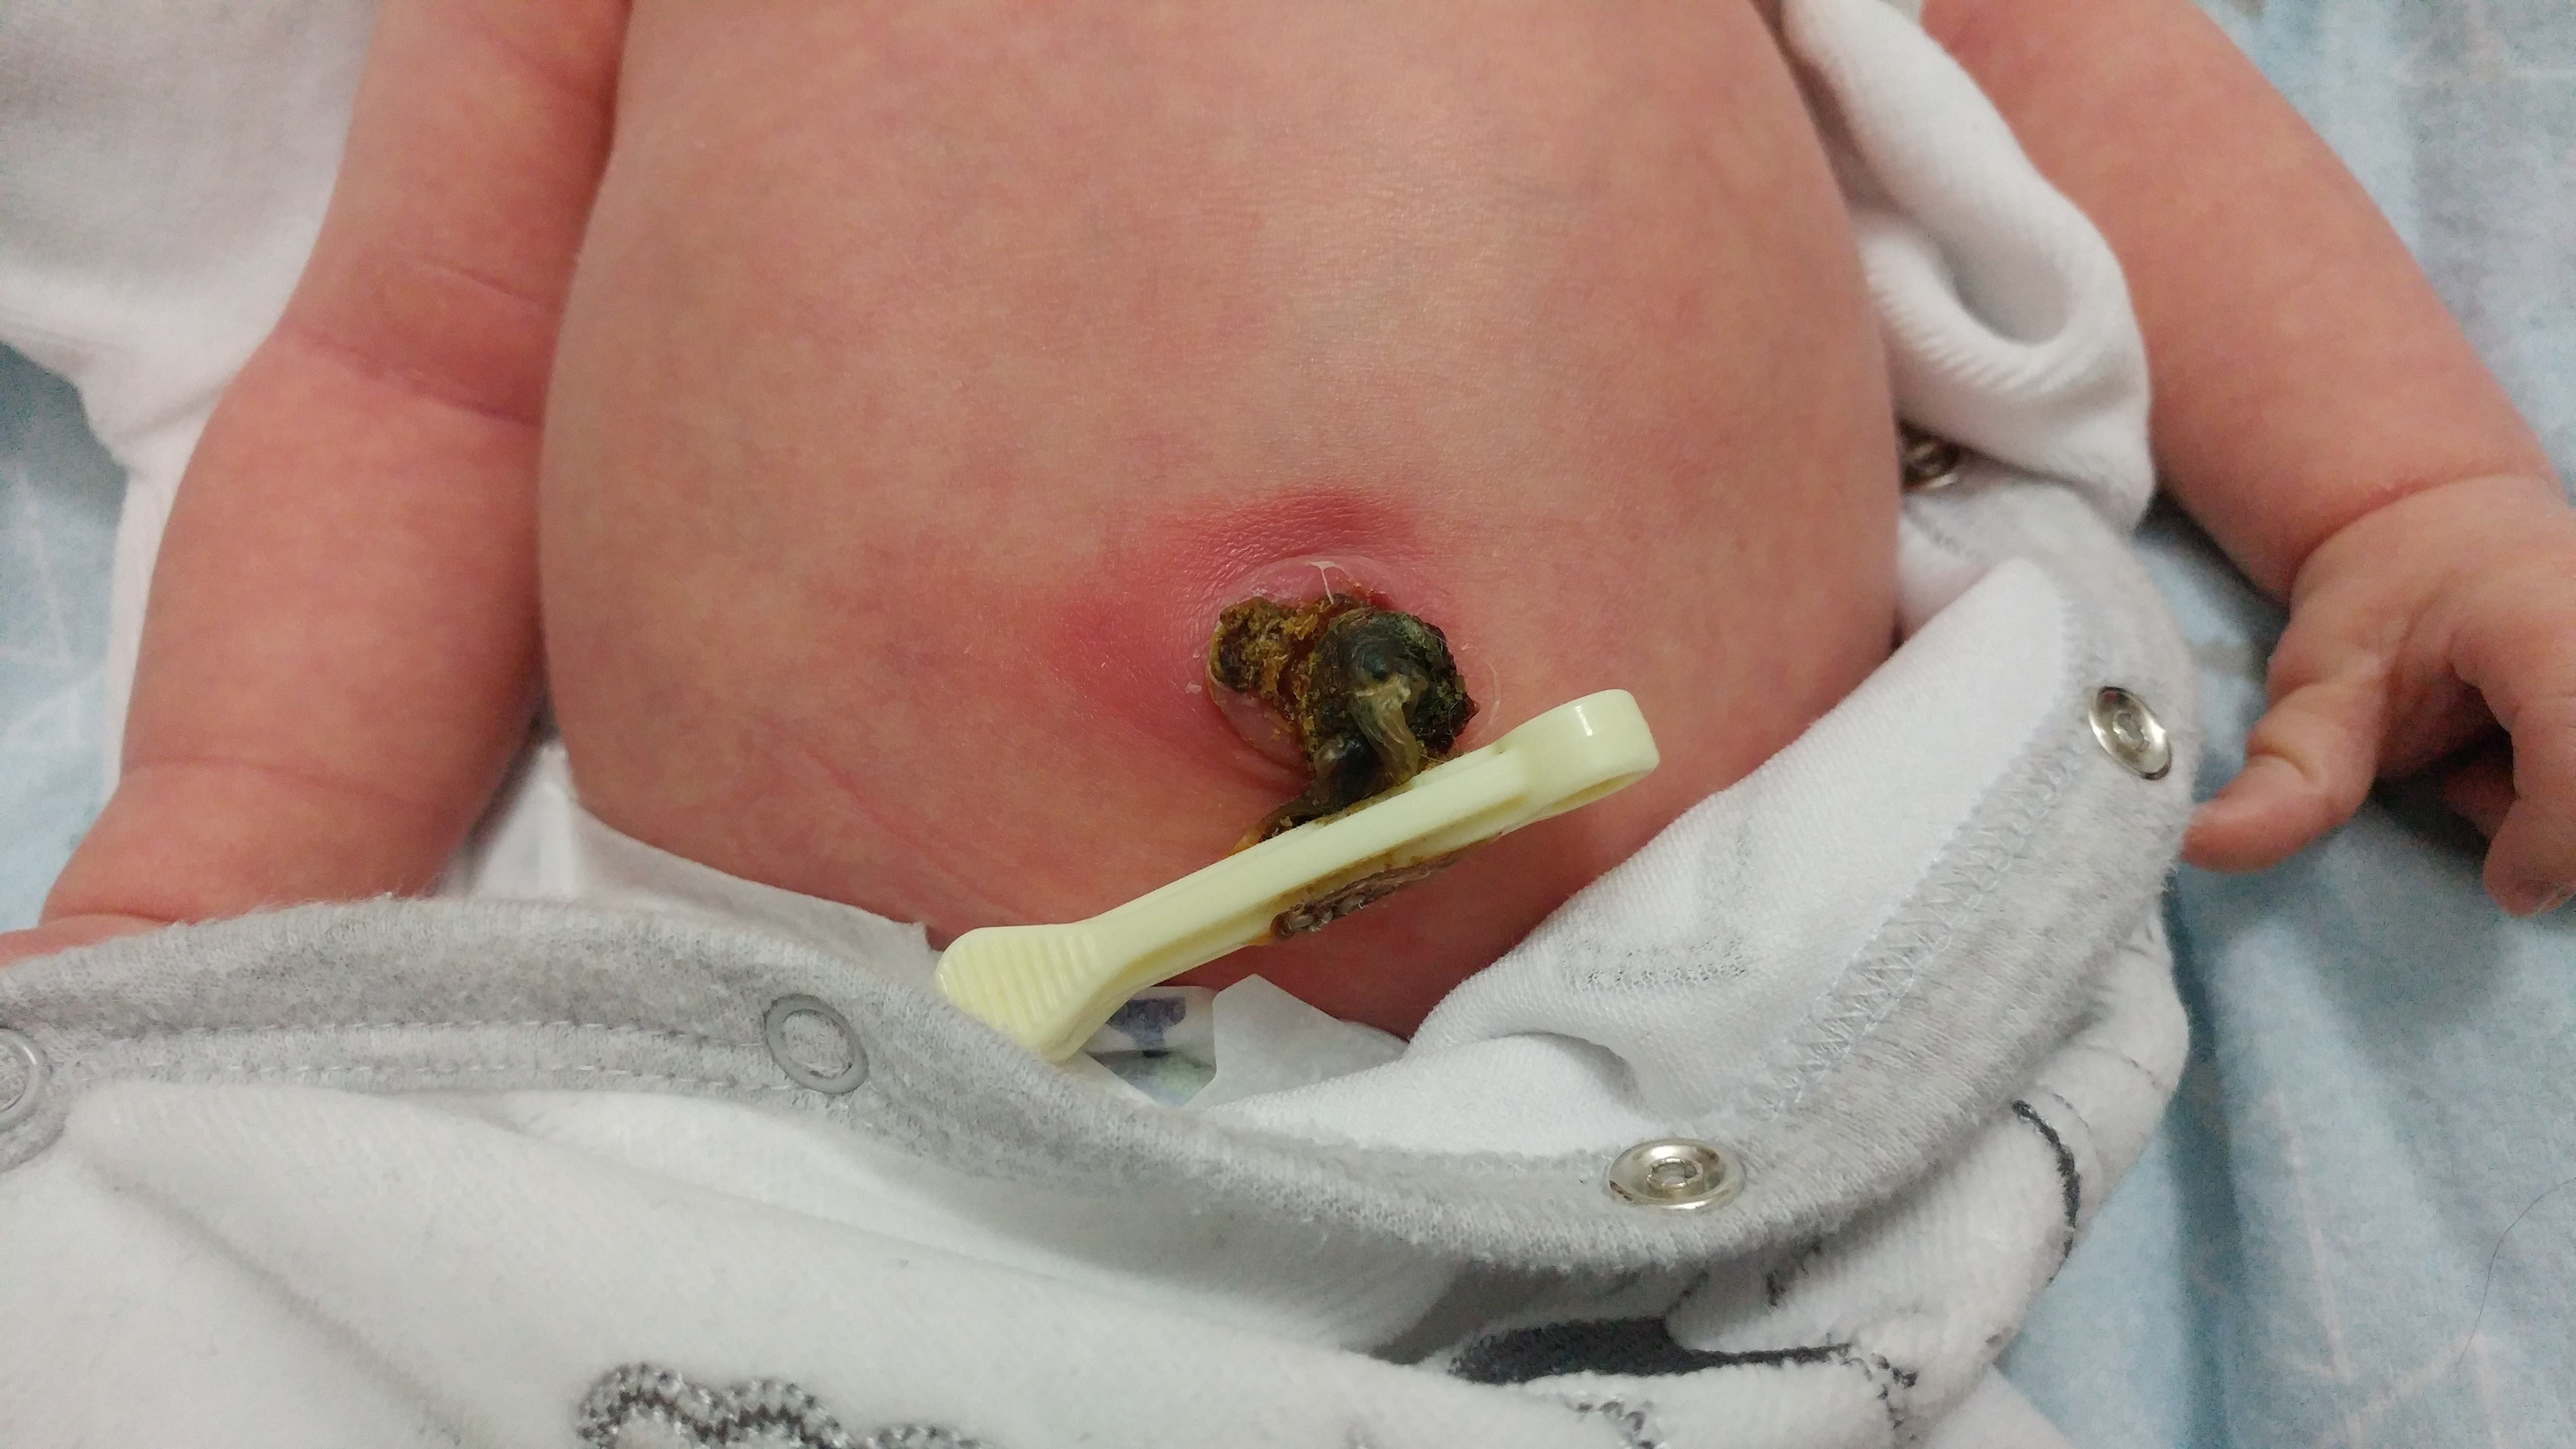 Newborn Baby Umbilical Cord Infection - Newborn baby